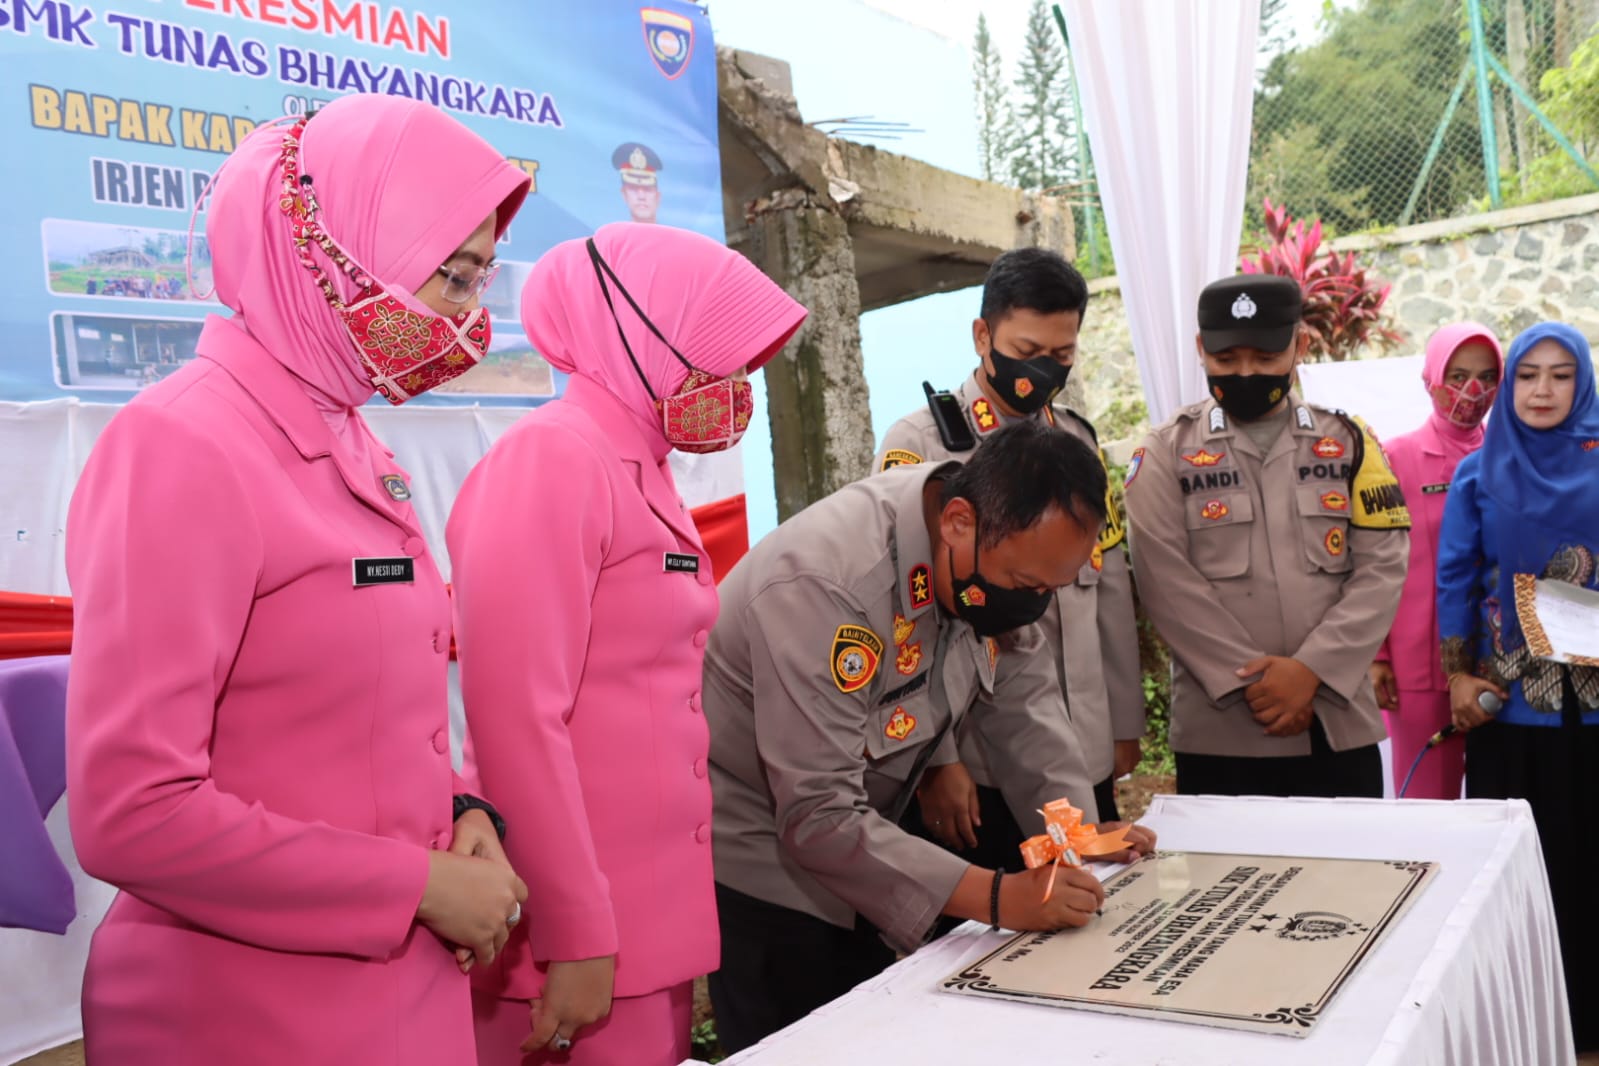 Kapolda Jabar, Irjen Pol Suntana saat meresmikan SMK Tunas Bhayangkara